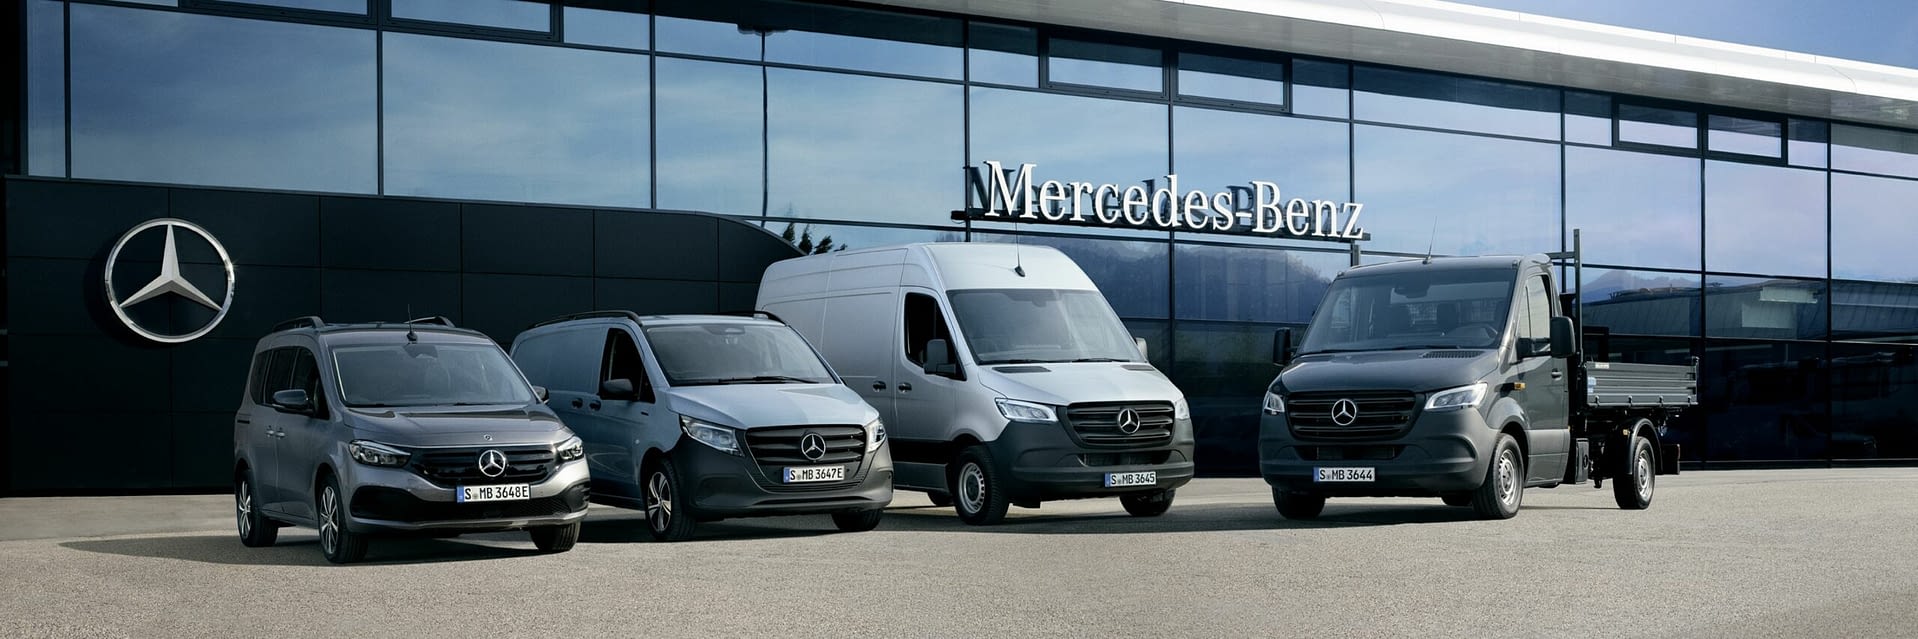 Merceds-Benz Transportbilar - VanPro Center - Landrins Bil – 1